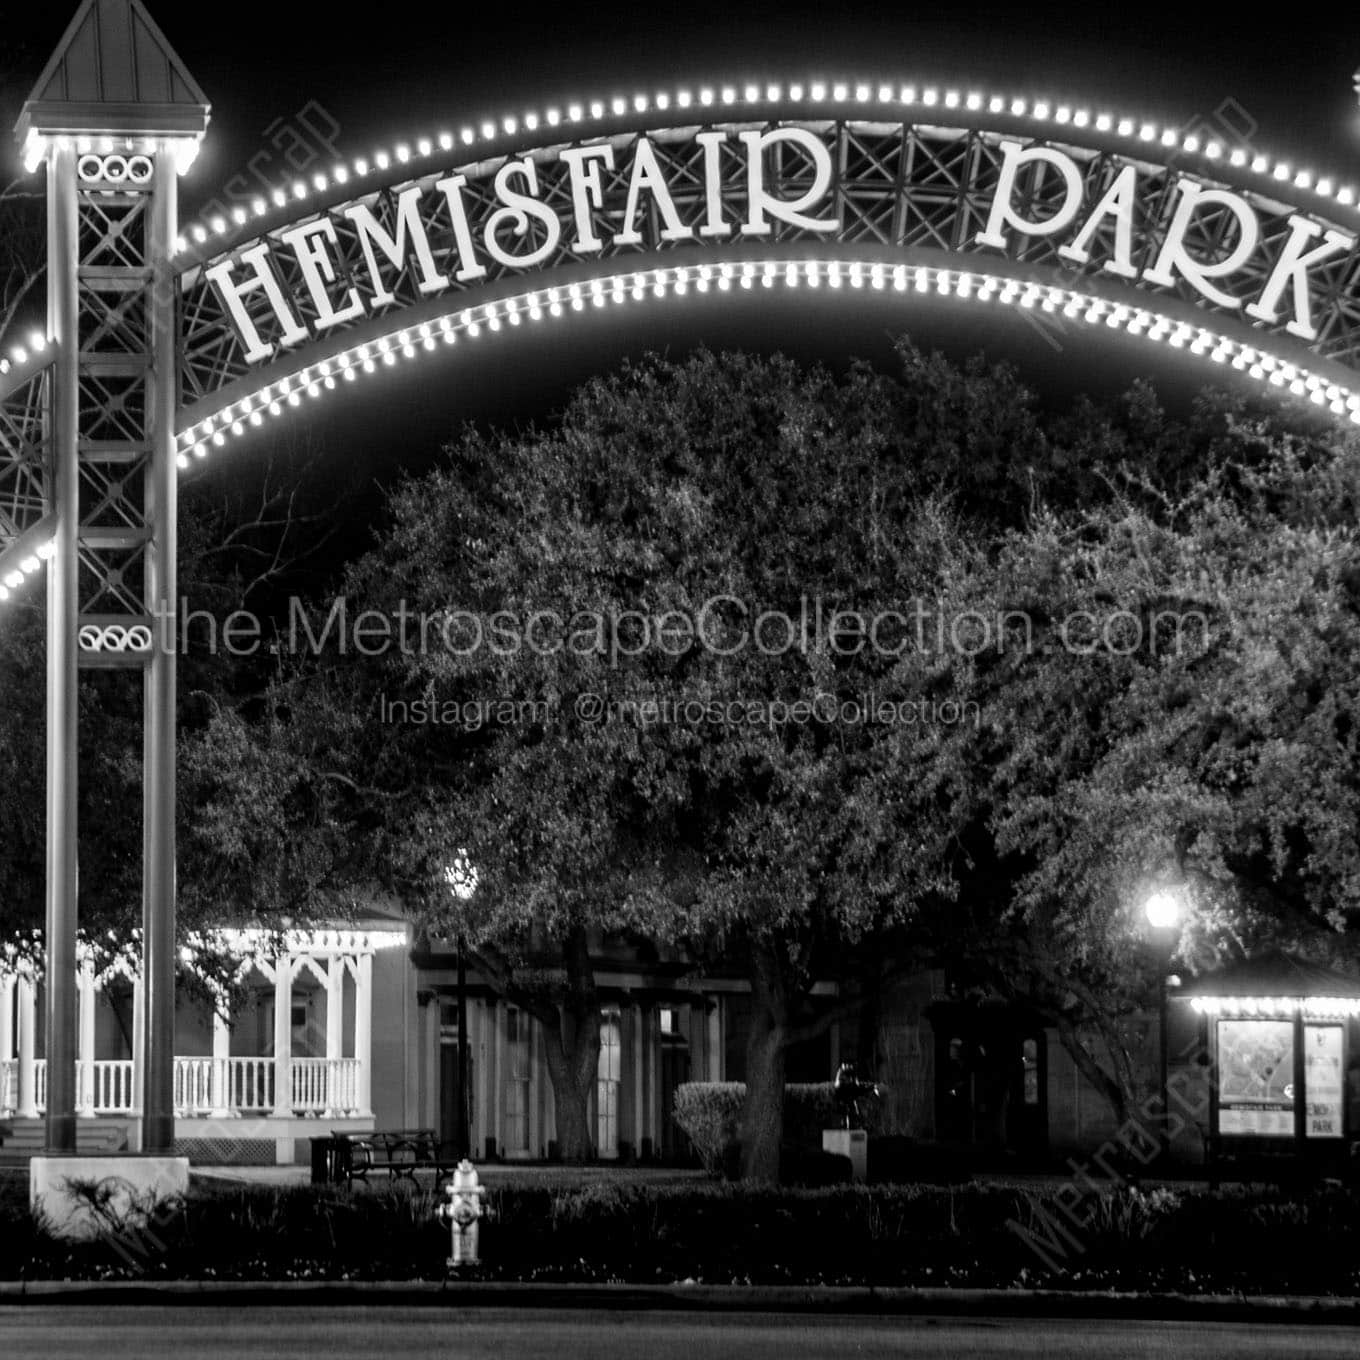 hemisfair park at night Black & White Office Art